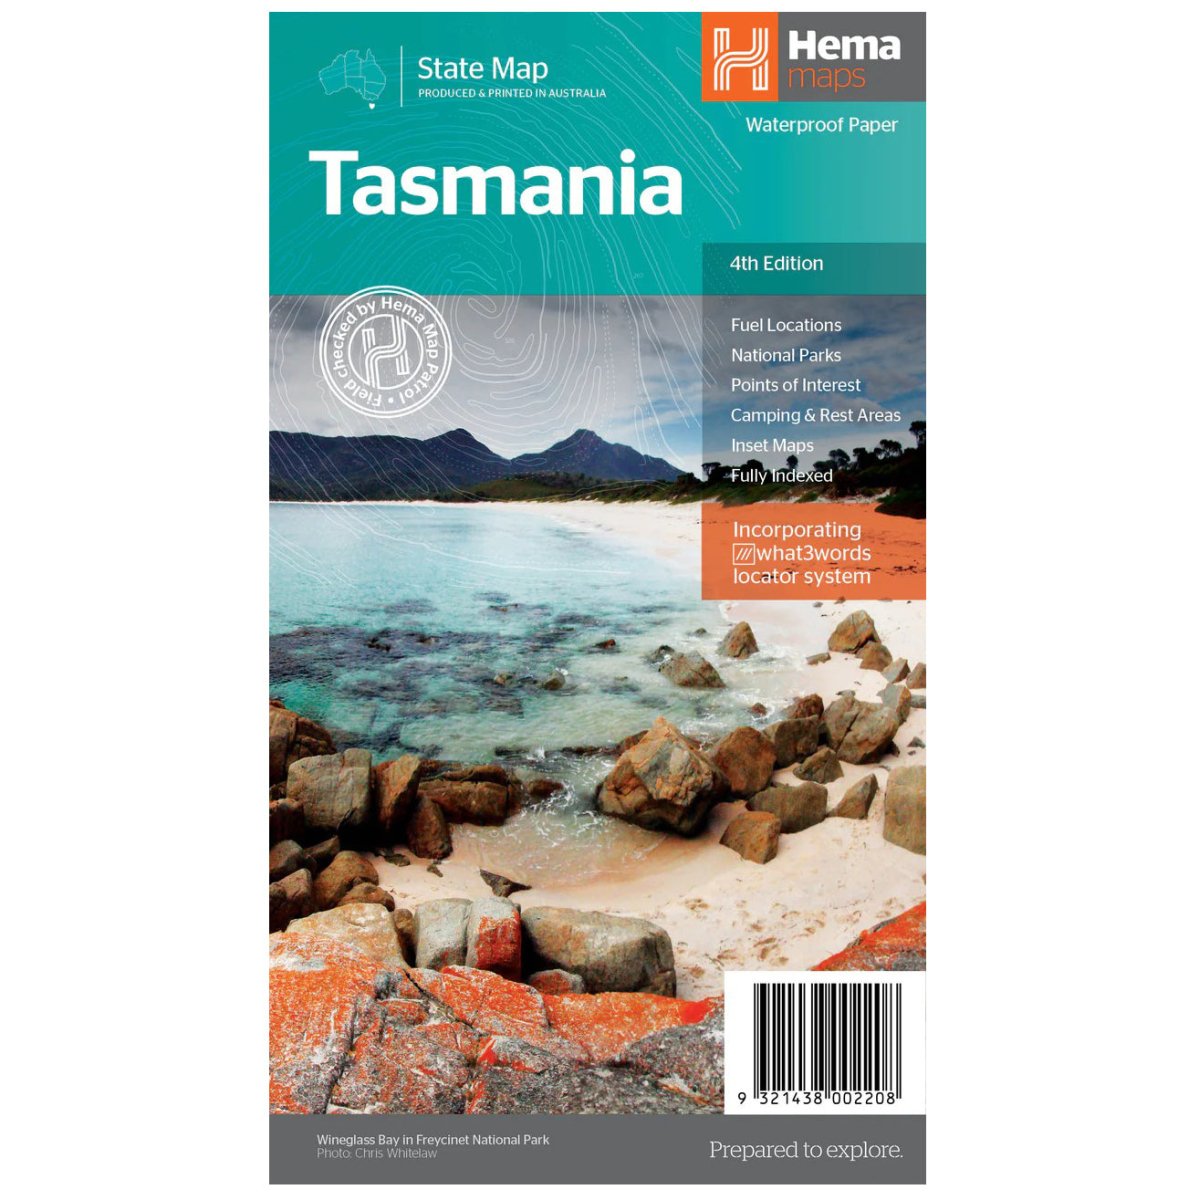 Tasmania State Map | Hema Maps | A247 Gear